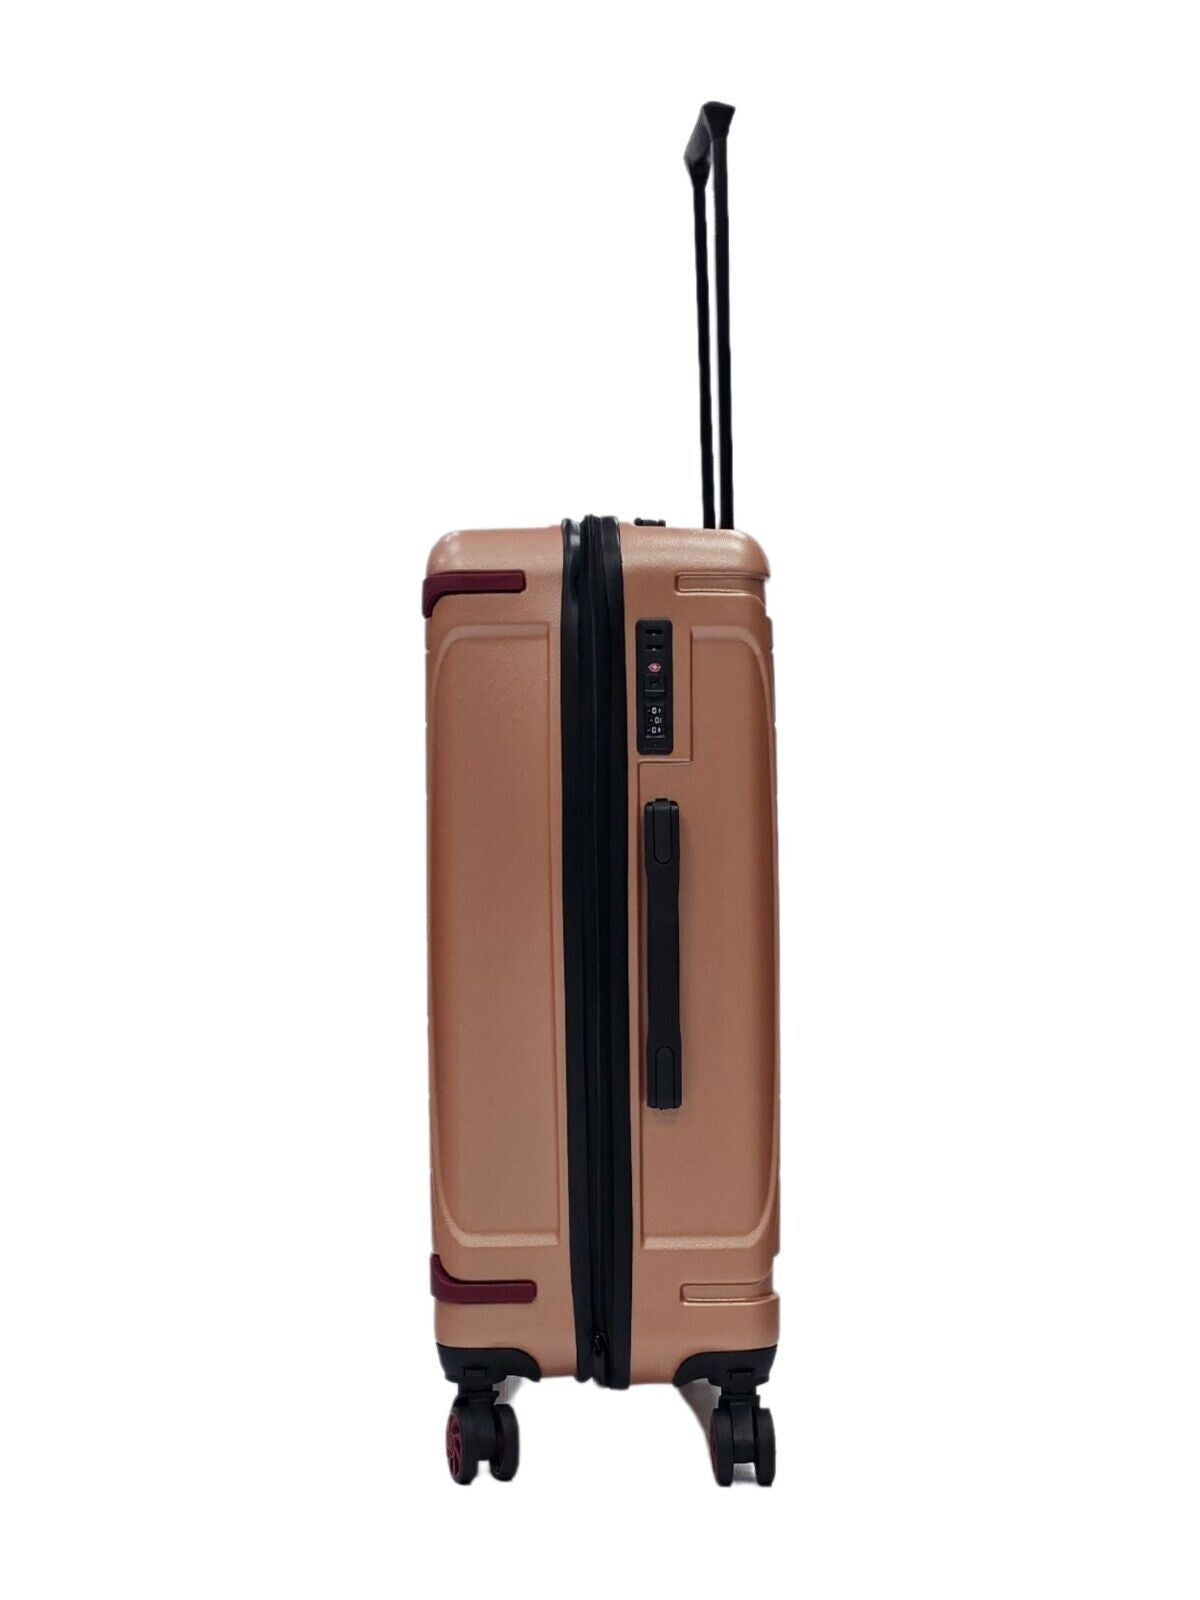 Hard Shell Rose Gold Cabin Suitcase Set 4 Wheel Luggage Travel Bag